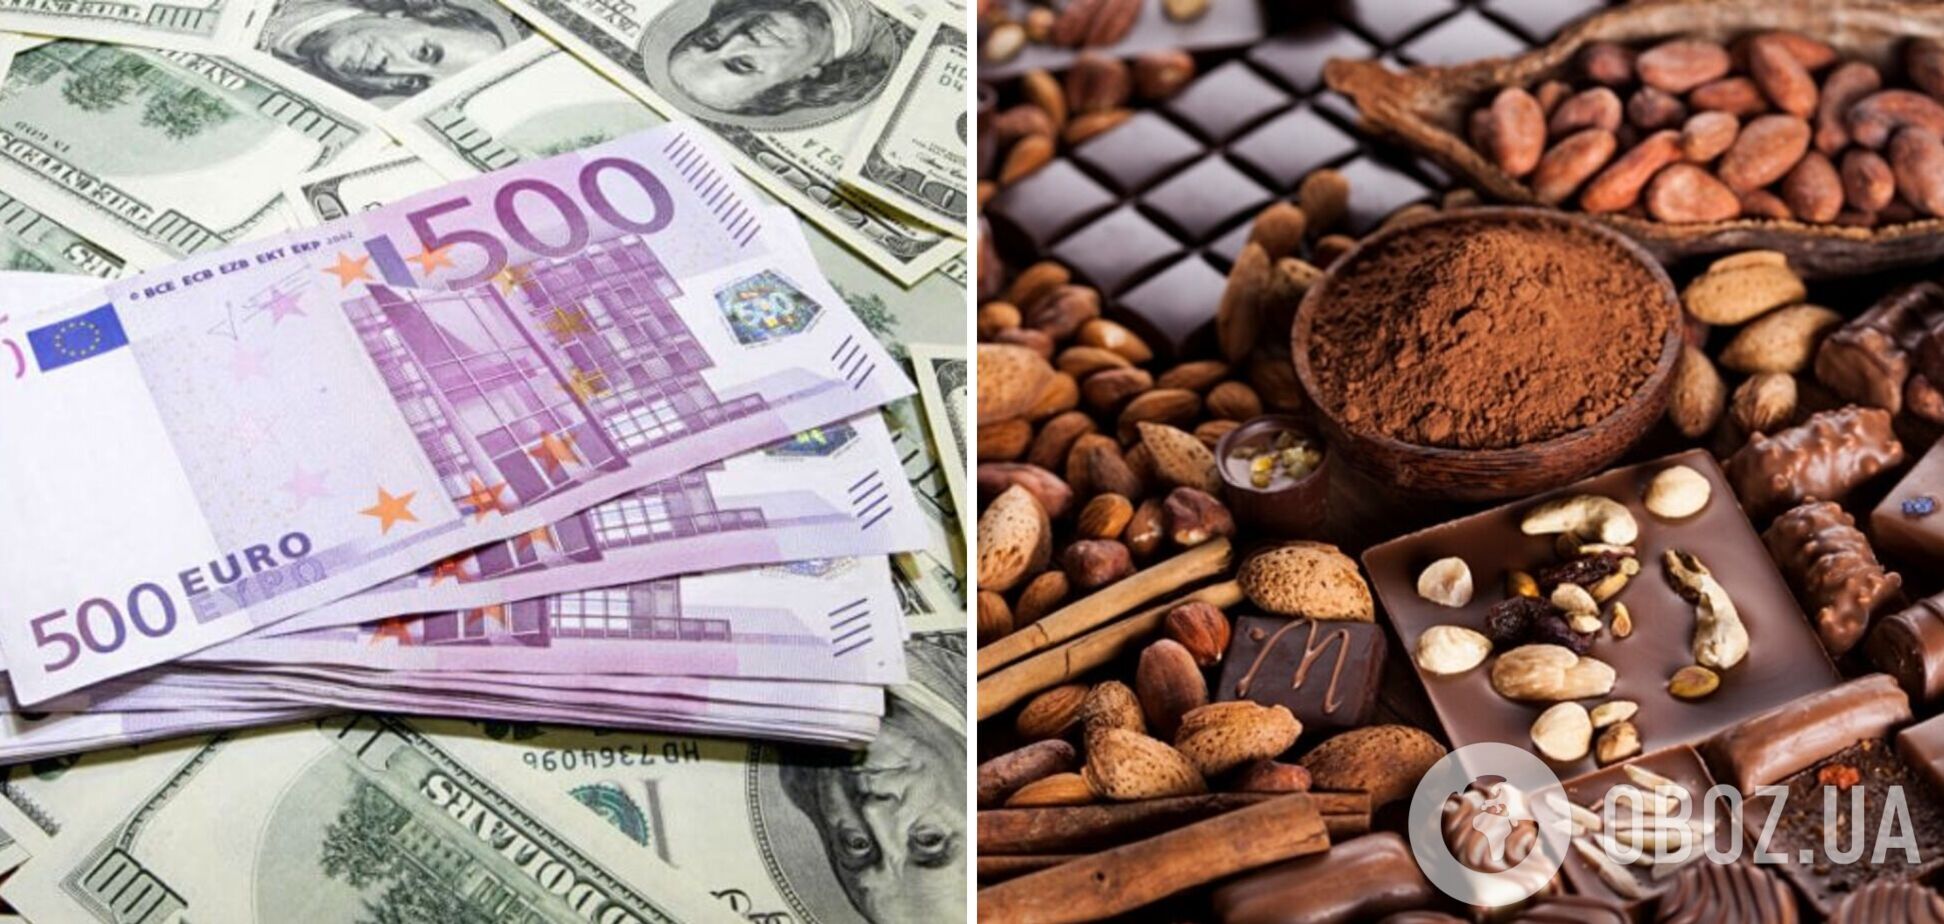 Цены на какао достигли рекордного максимума